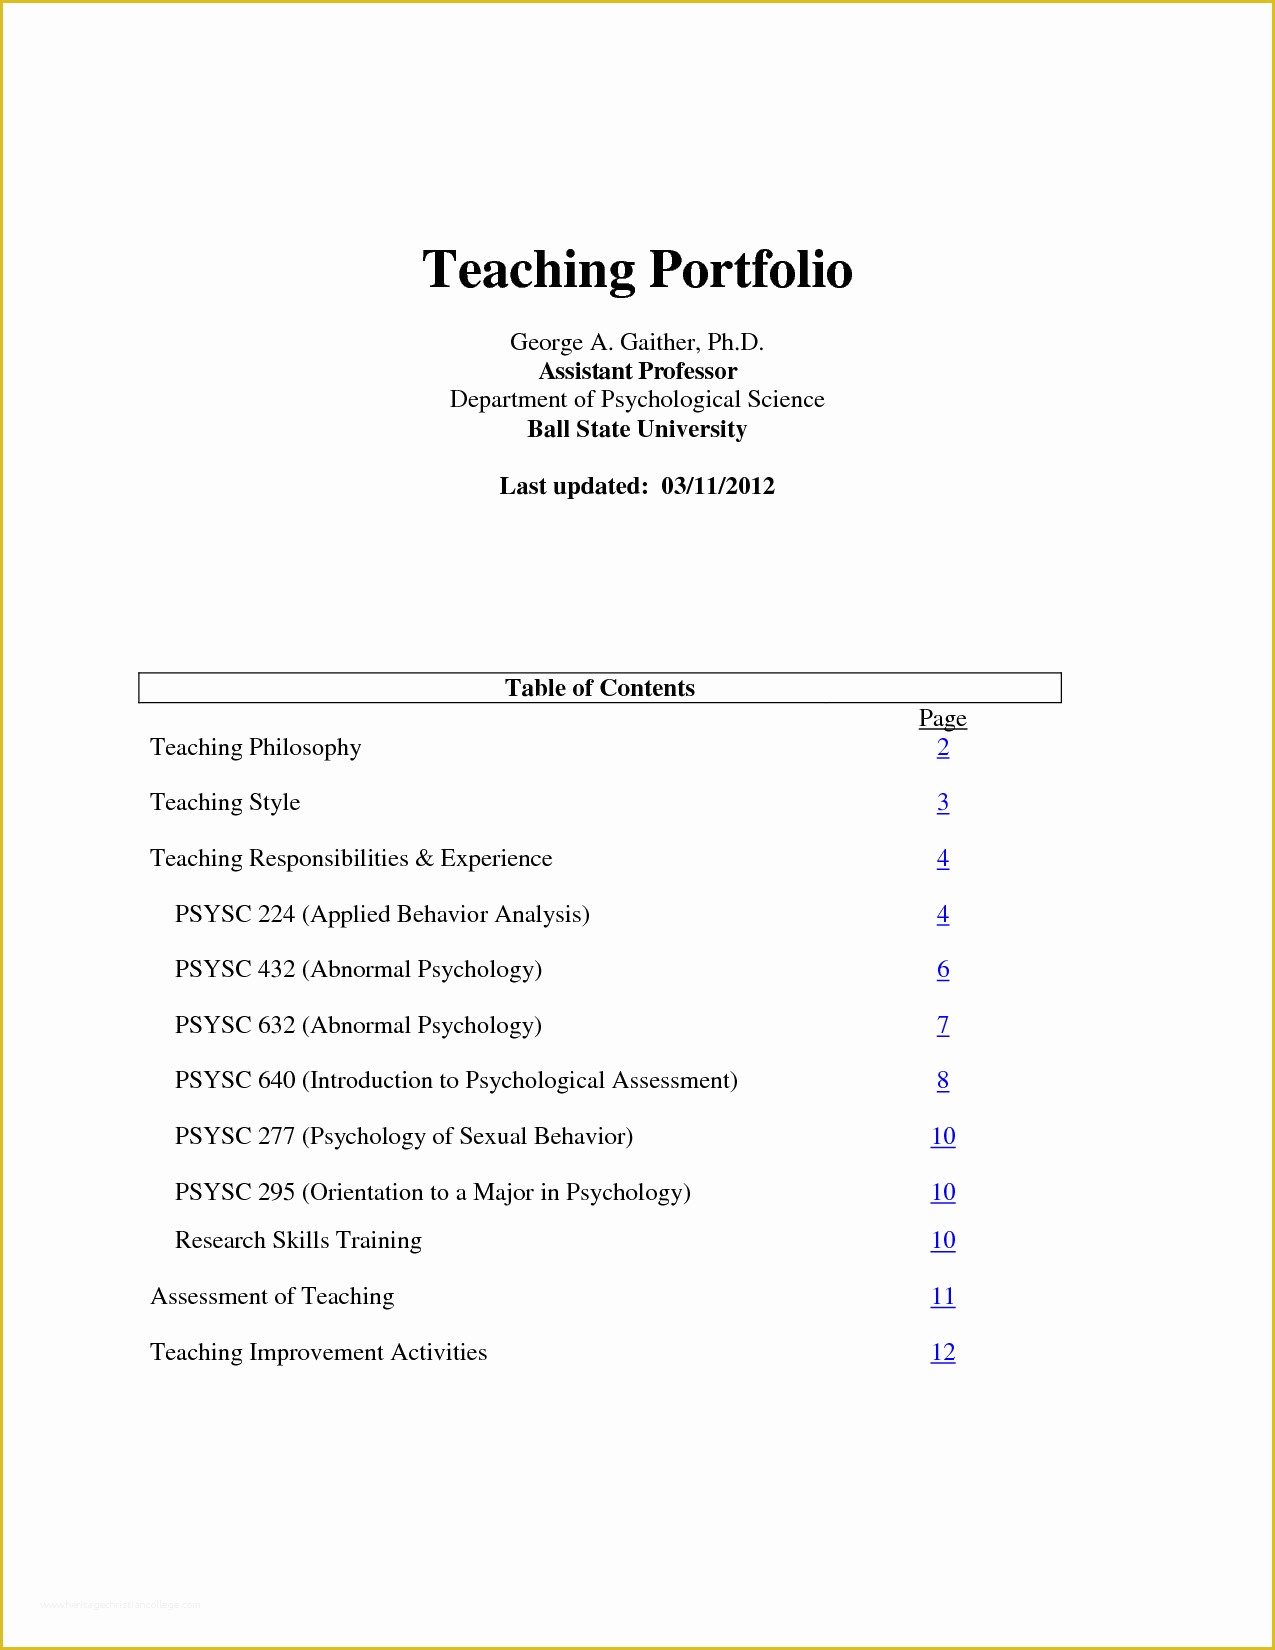 Teaching Portfolio Template Free Of Best S Of Portfolio Table Contents Example